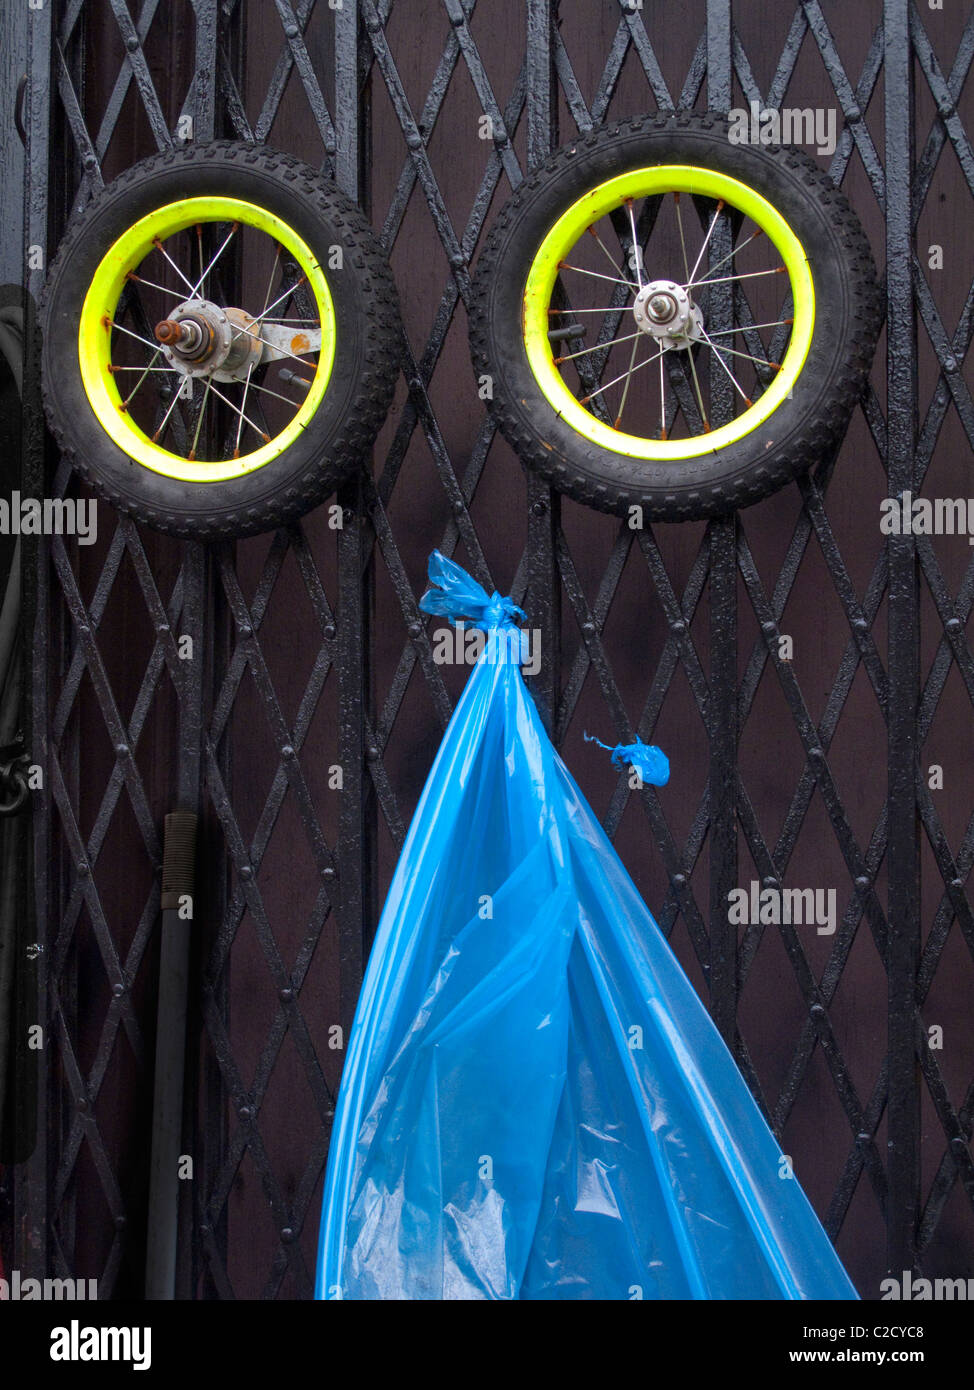 bike tires on gate Stock Photo